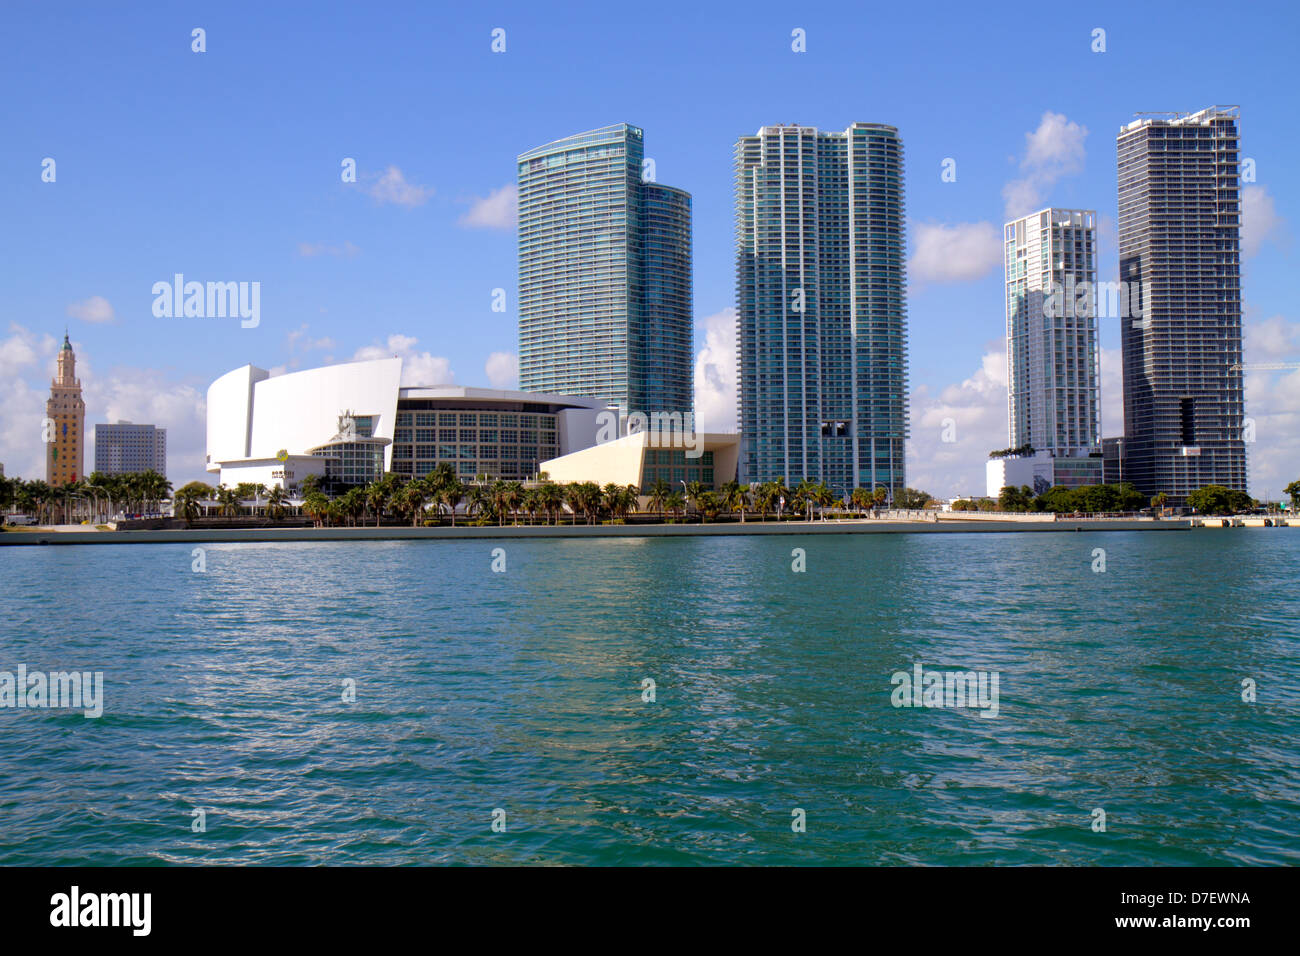 Miami Florida,Biscayne Bay,Biscayne Boulevard,skyline,water,skyscrapers,high rise skyscraper skyscrapers building buildings condominium residential ap Stock Photo